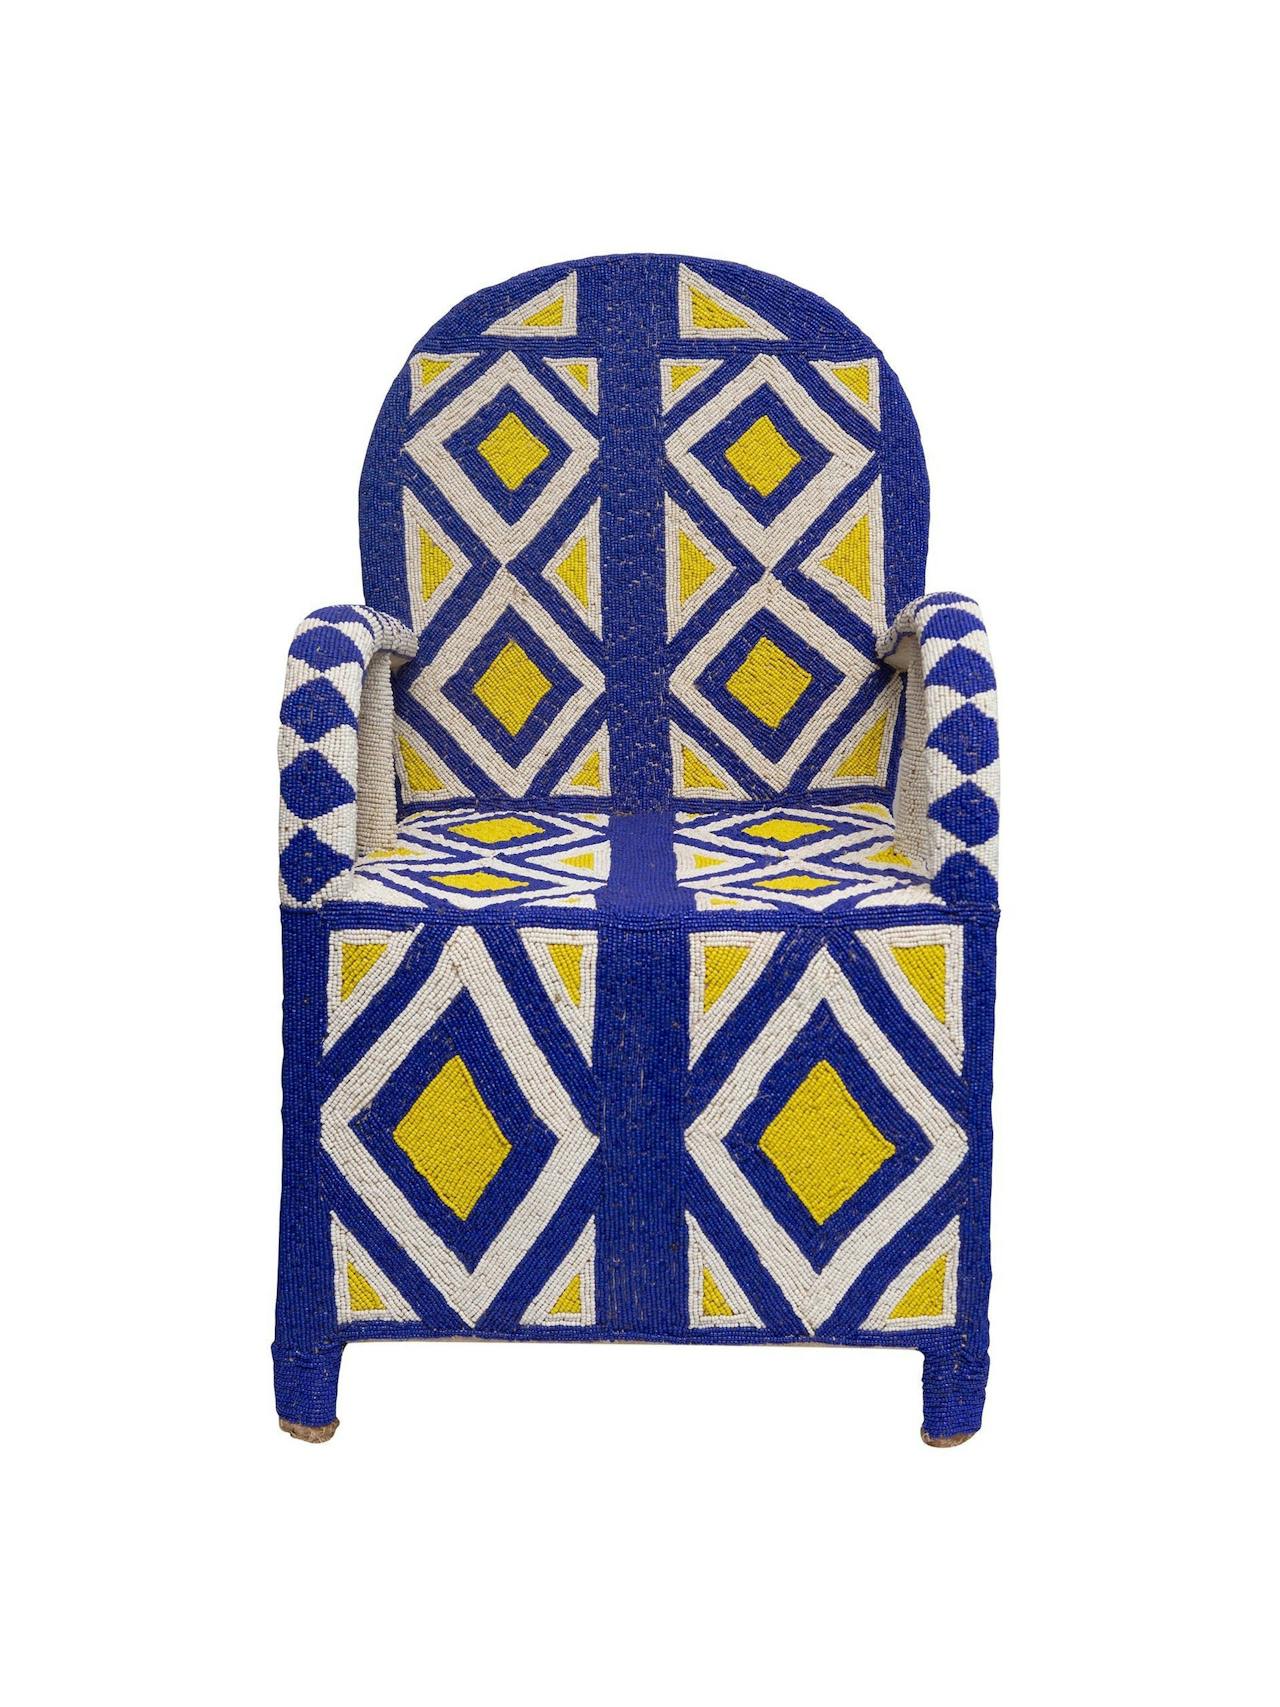 Cobalt Blue and Sunshine Yellow Yoruba Throne Chair